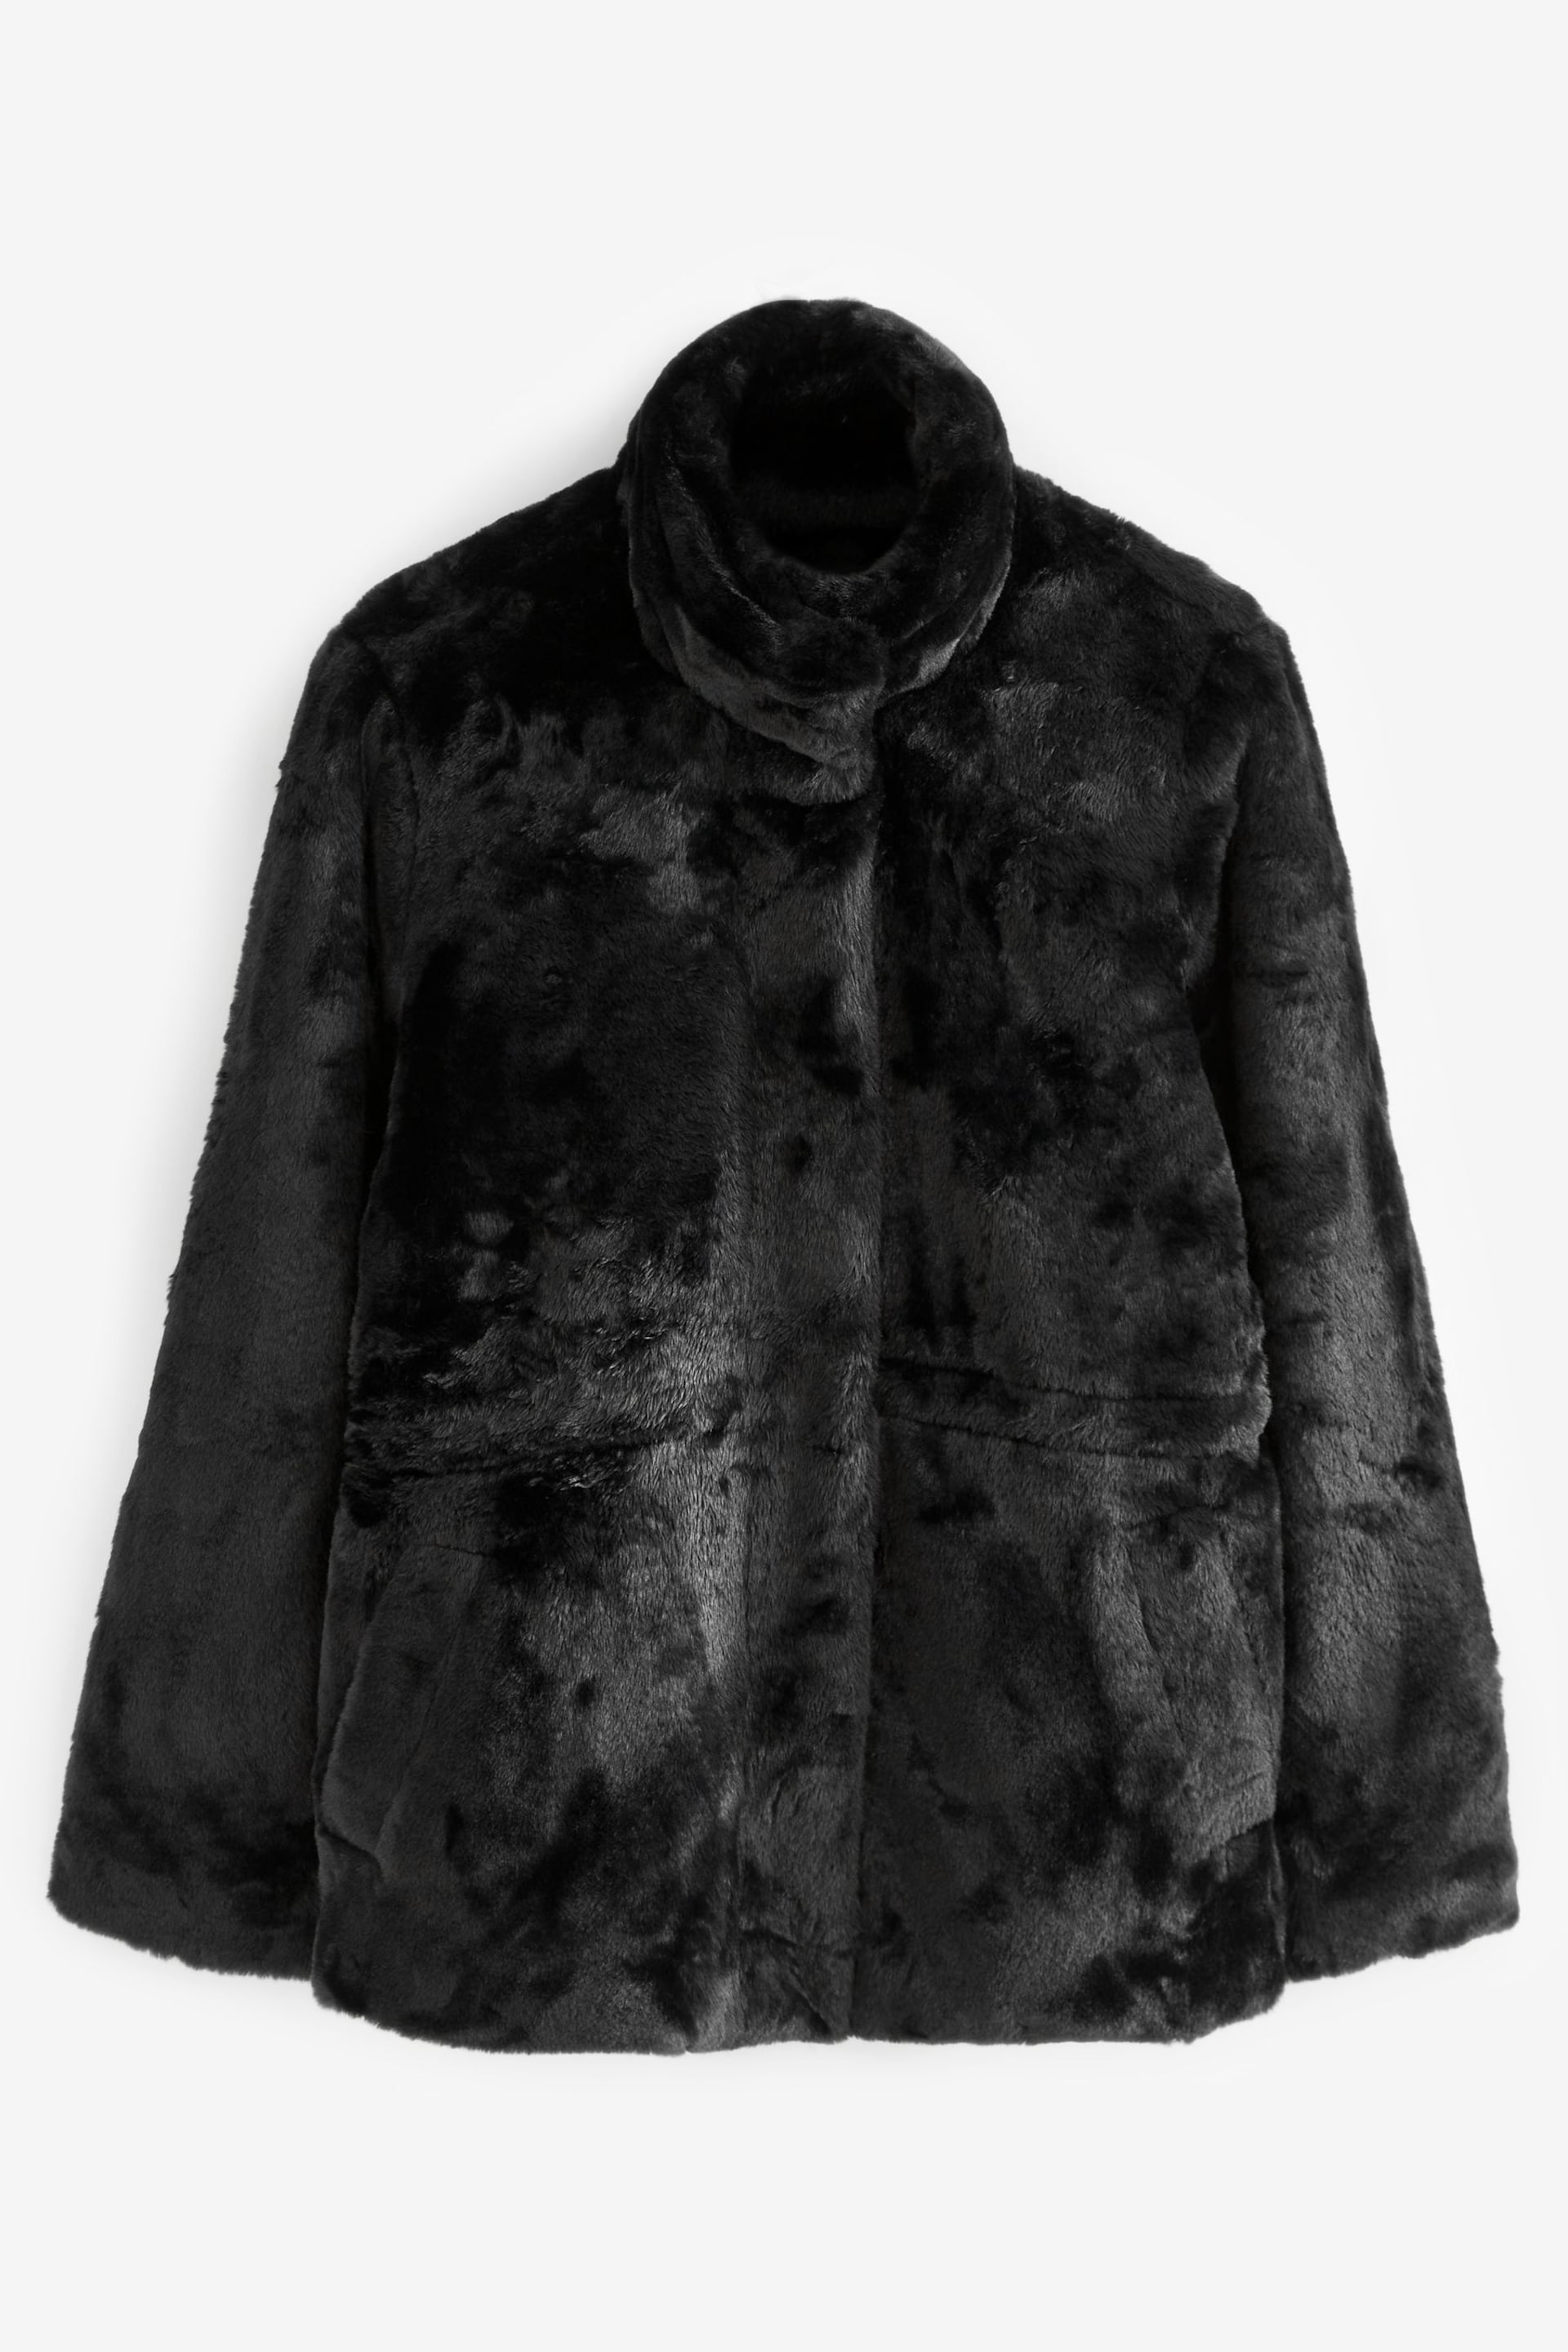 VERO MODA Black Faux Fur Coat - Image 6 of 7